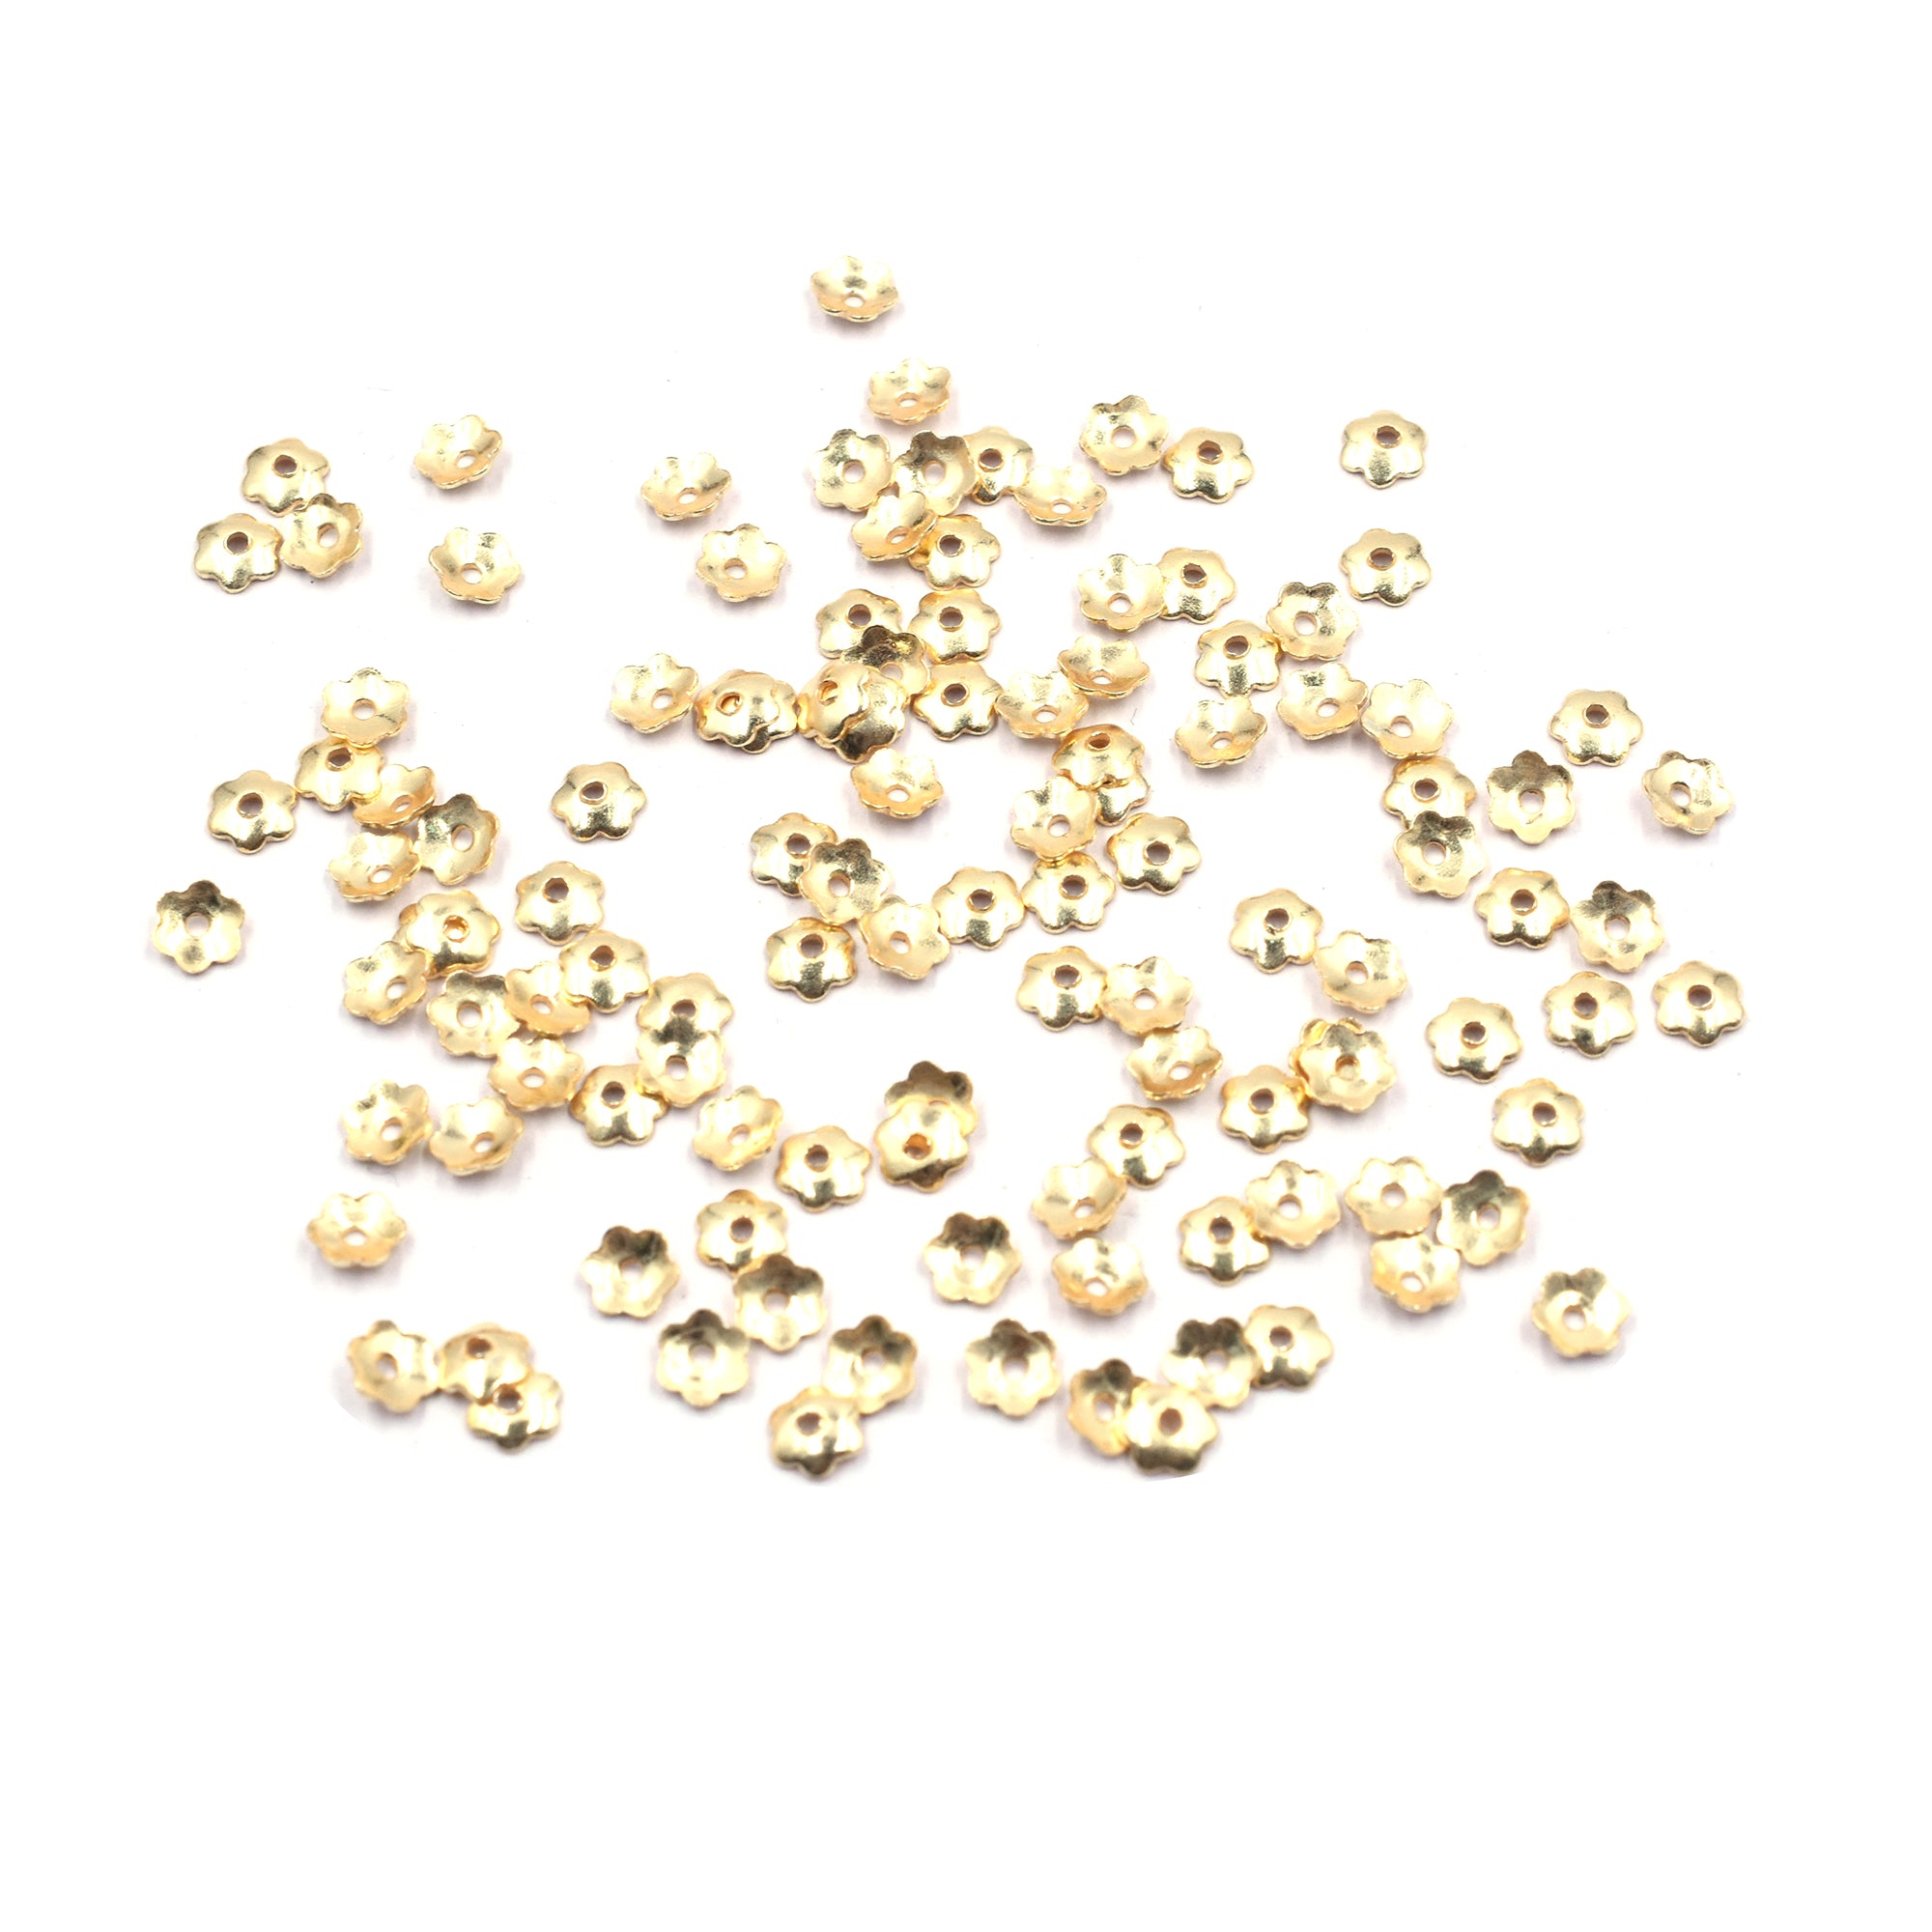 400 Pcs 5mm Half Cap Beads Gold Plated Copper